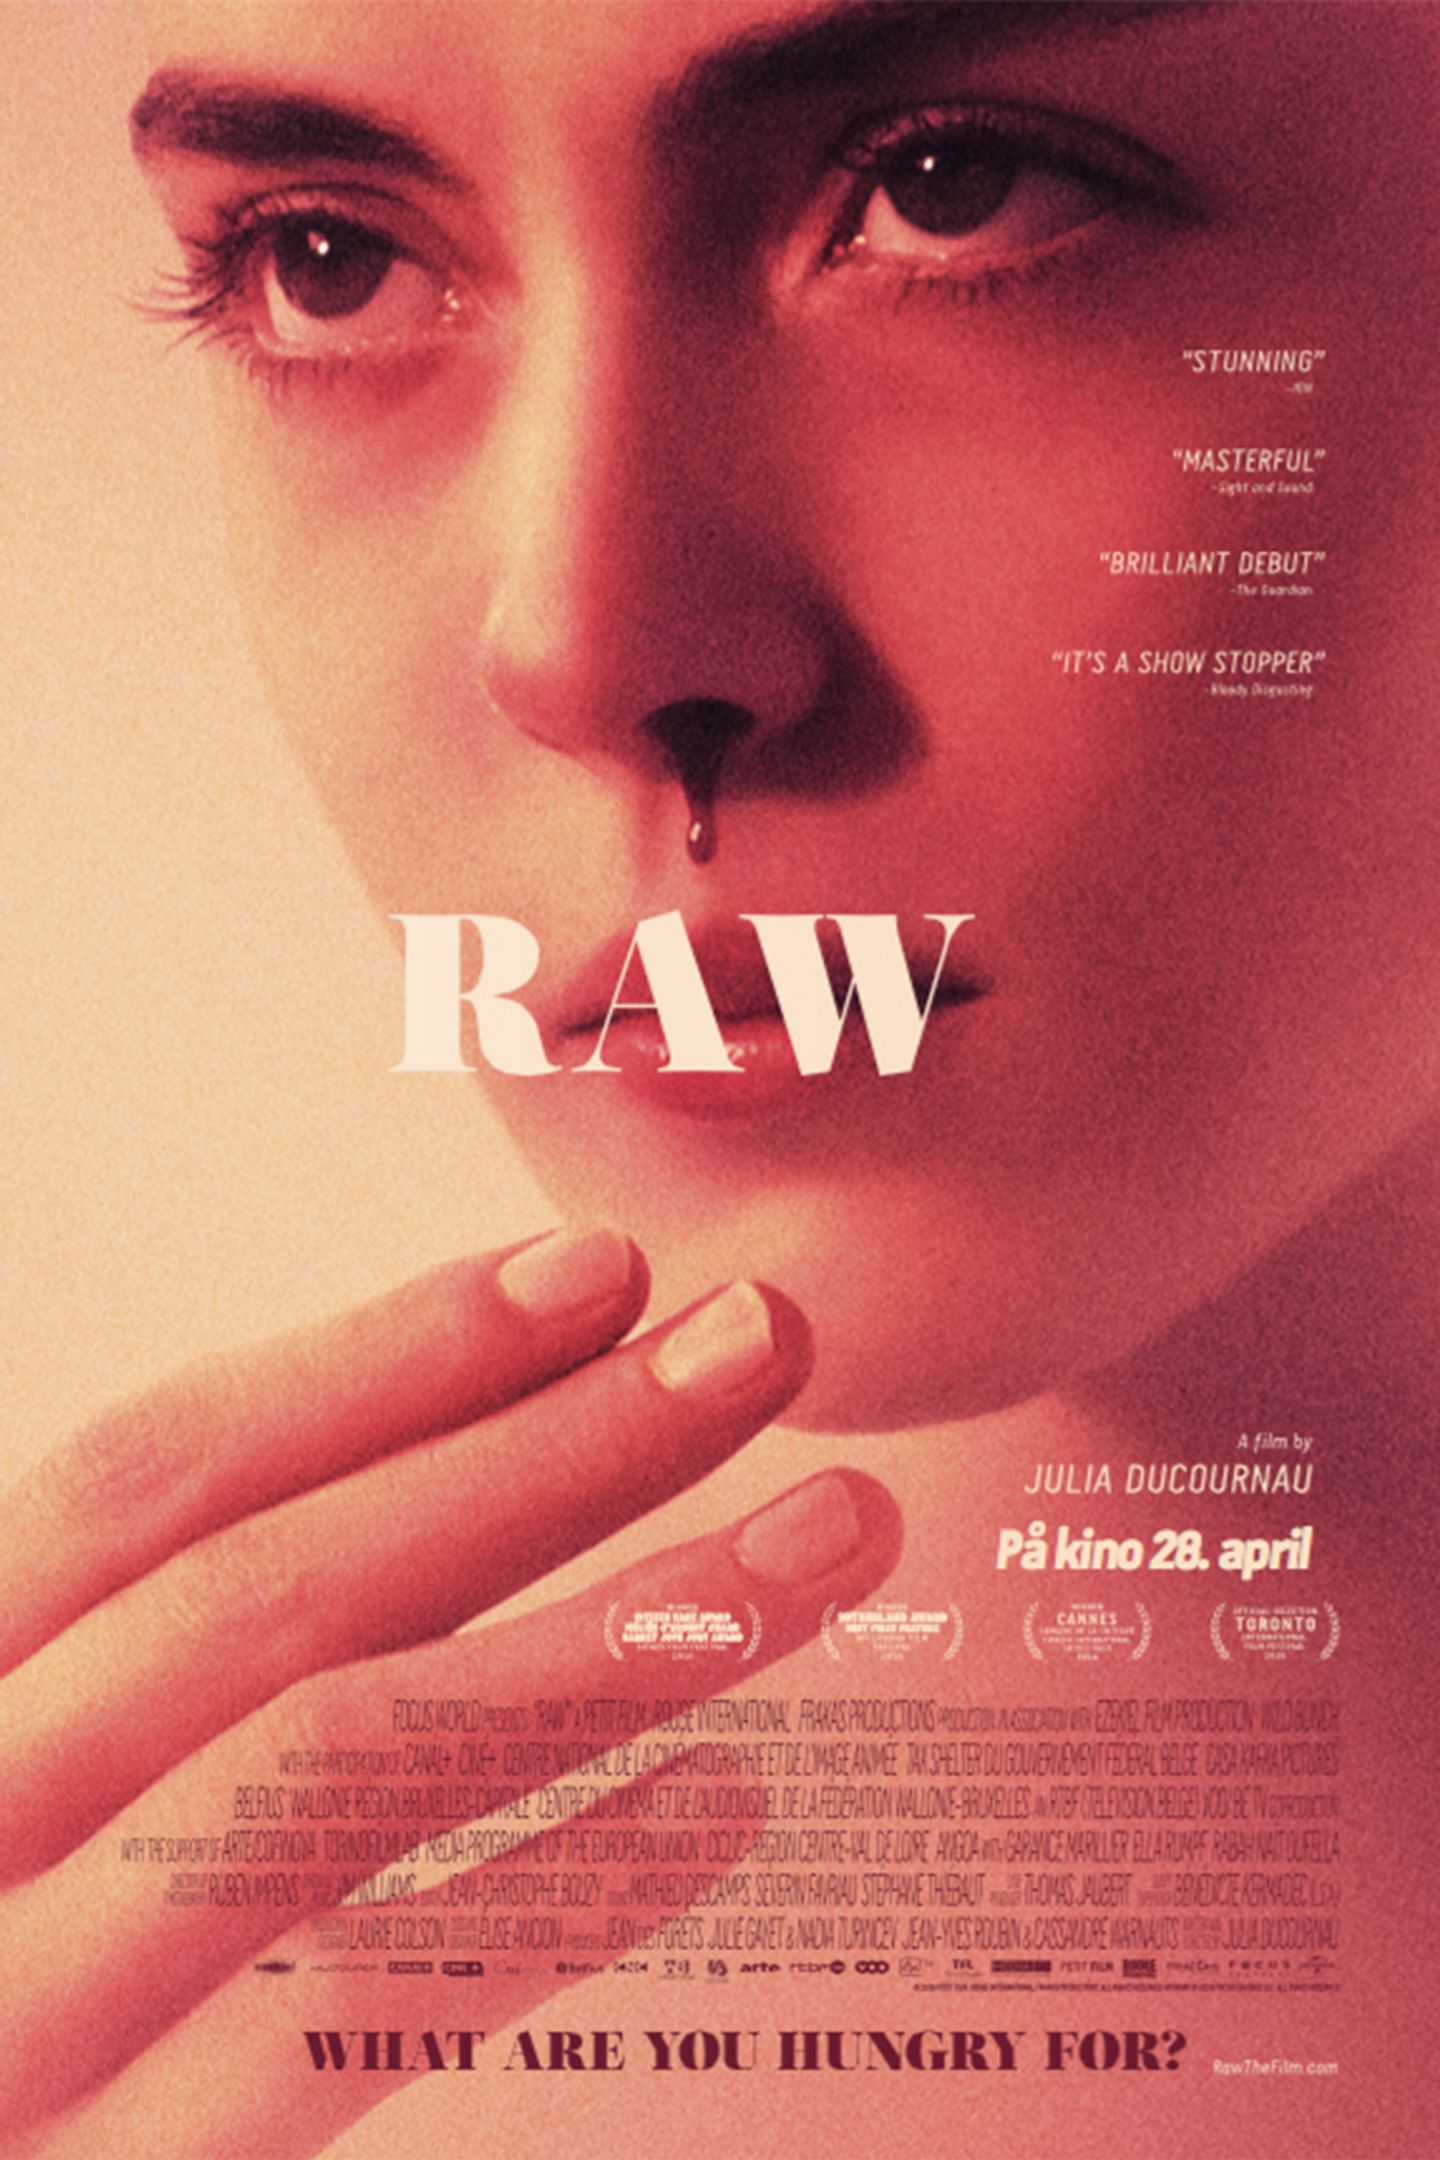 Plakat for 'Raw'